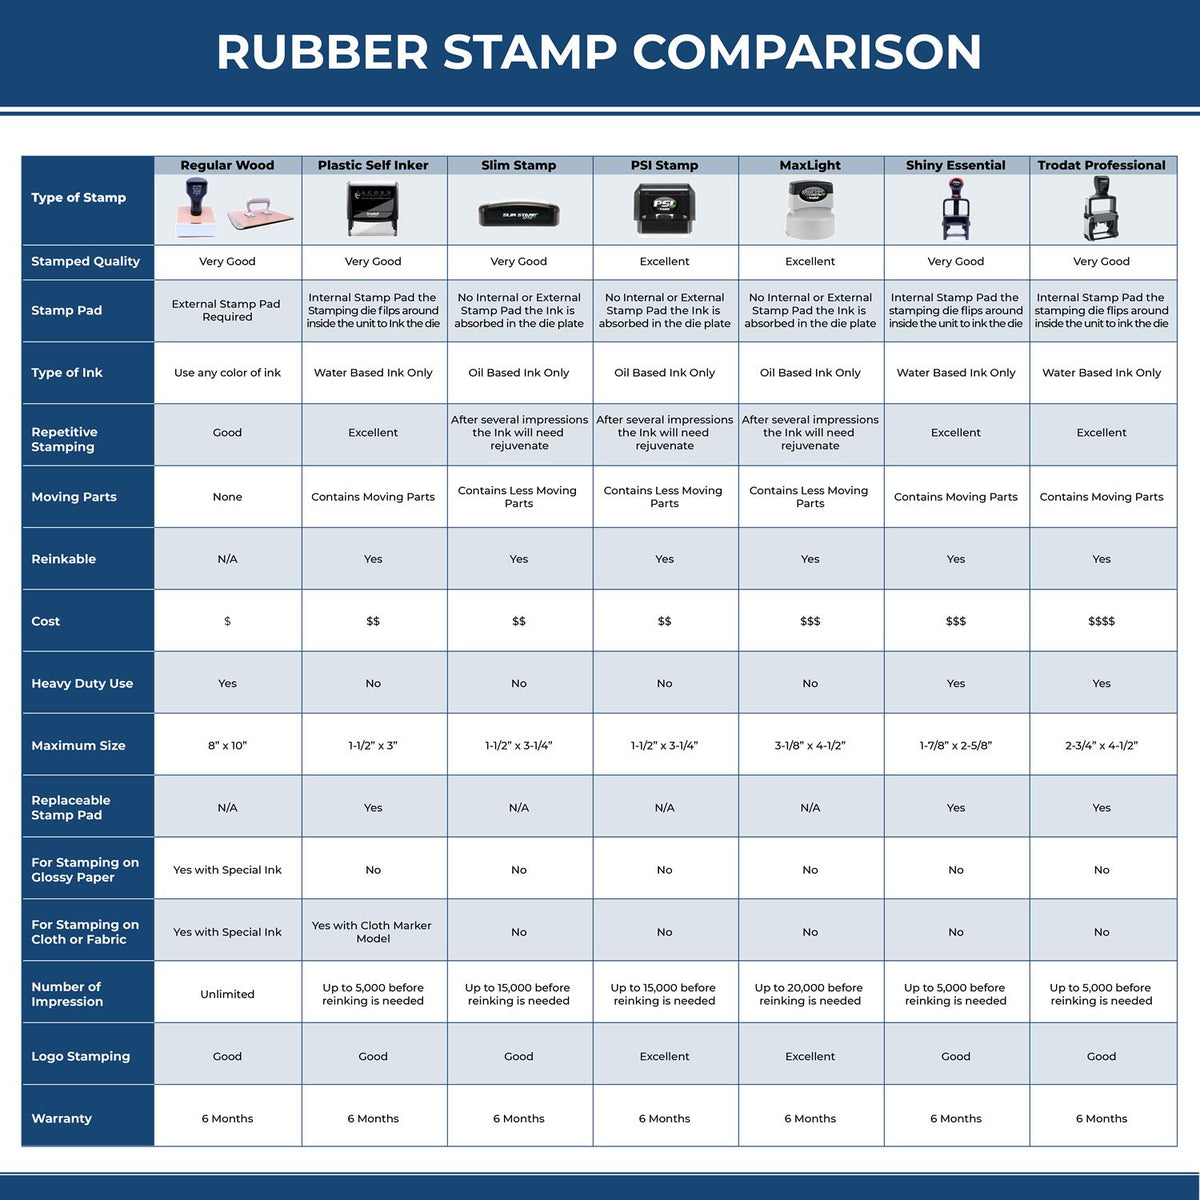 Application Complete Rubber Stamp 4251R Rubber Stamp Comparison